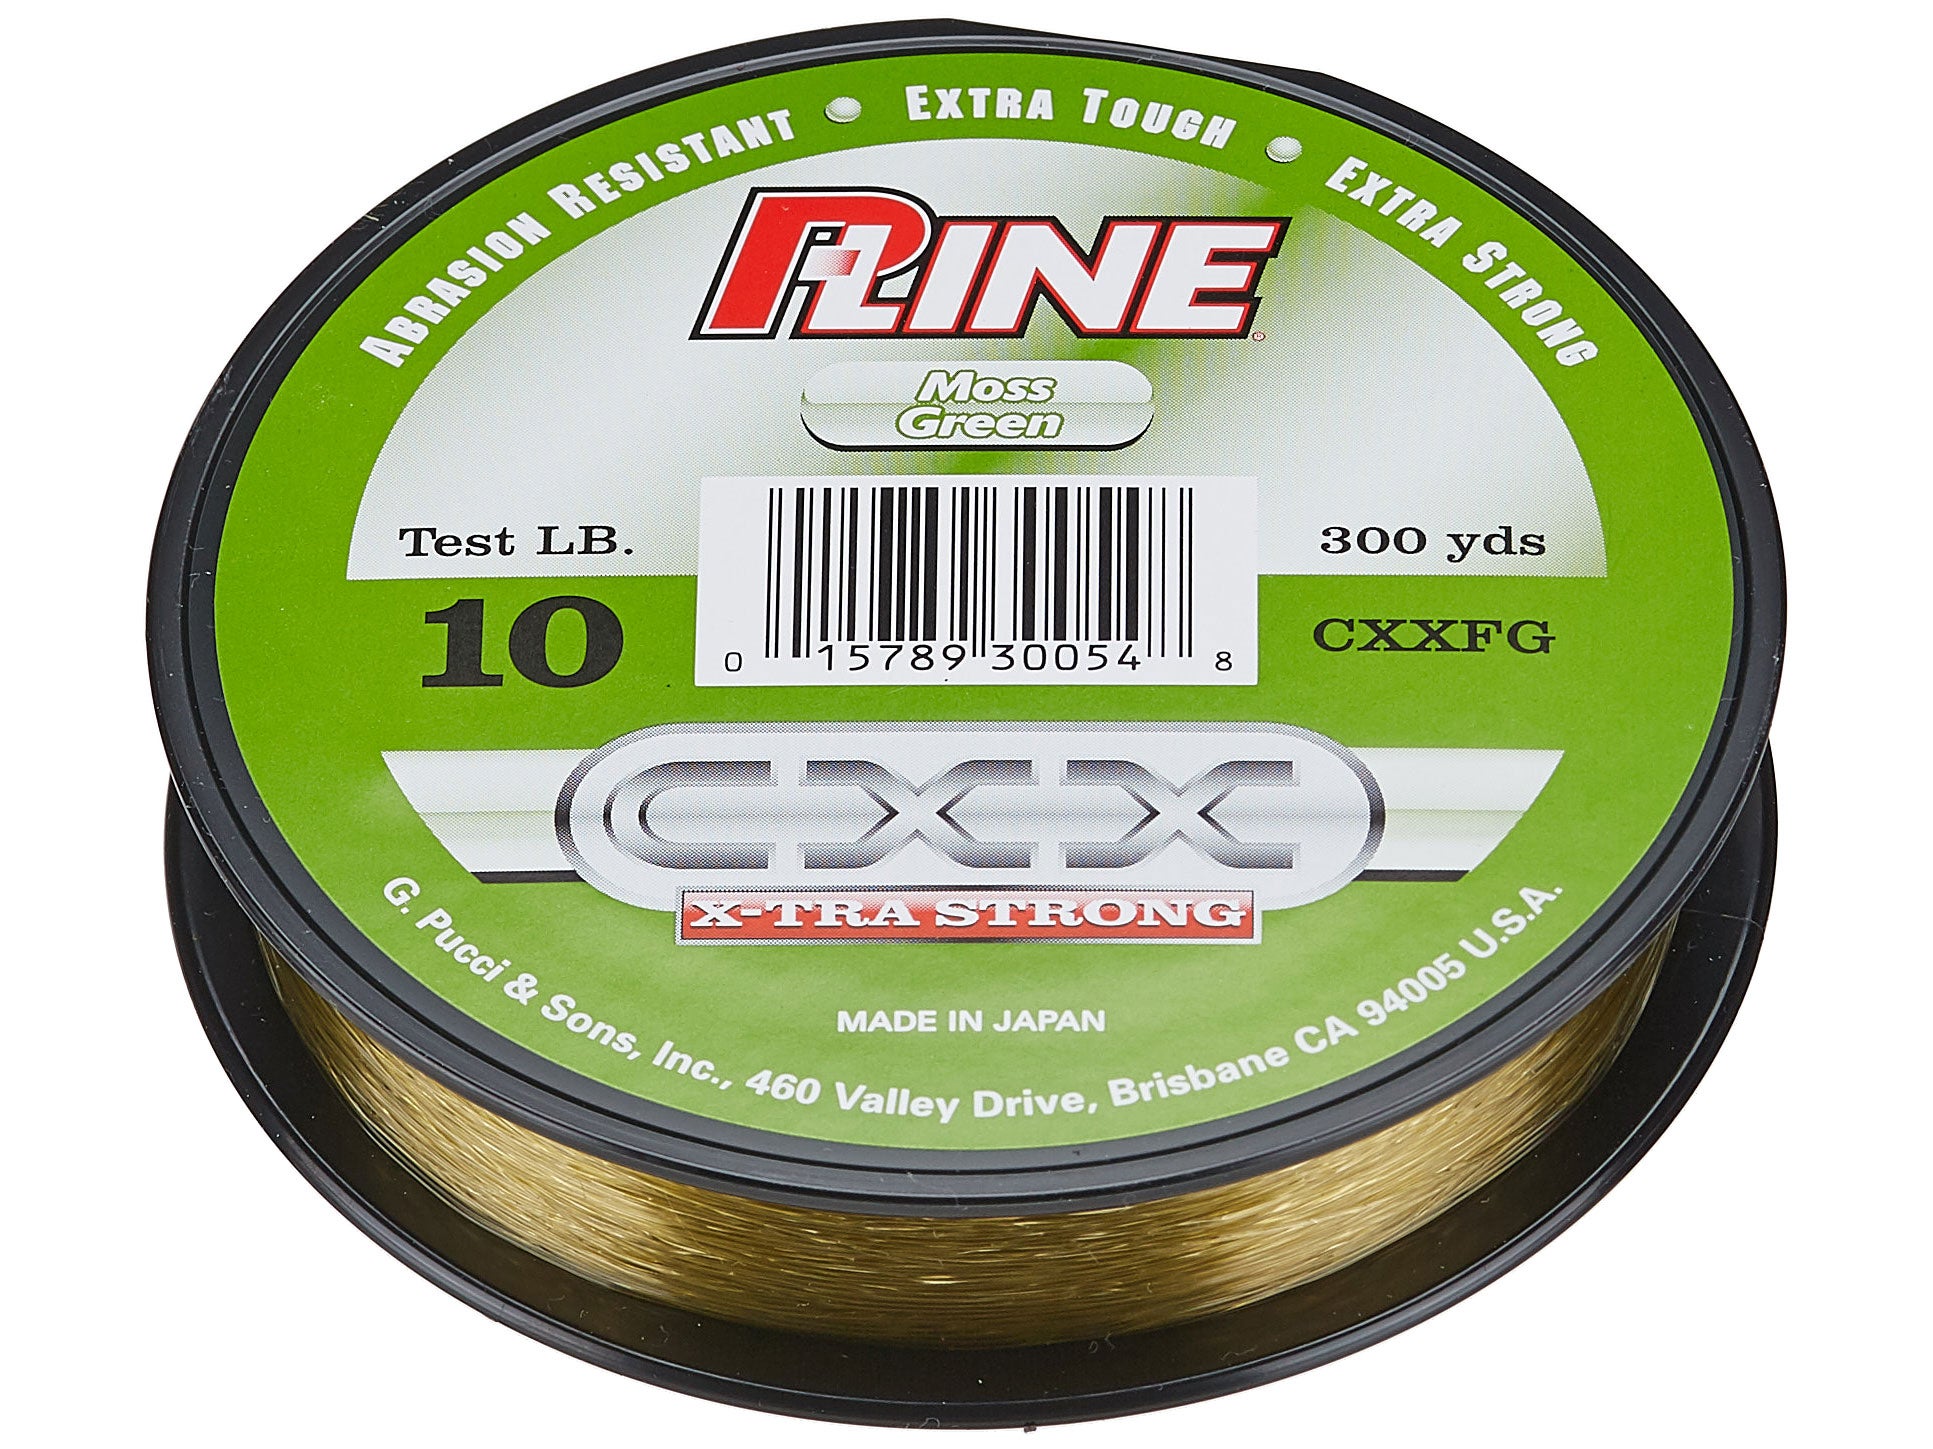 P-Line Cx Premium Clear Fluorescent Fishing Line 300 Yards Select Lb Test